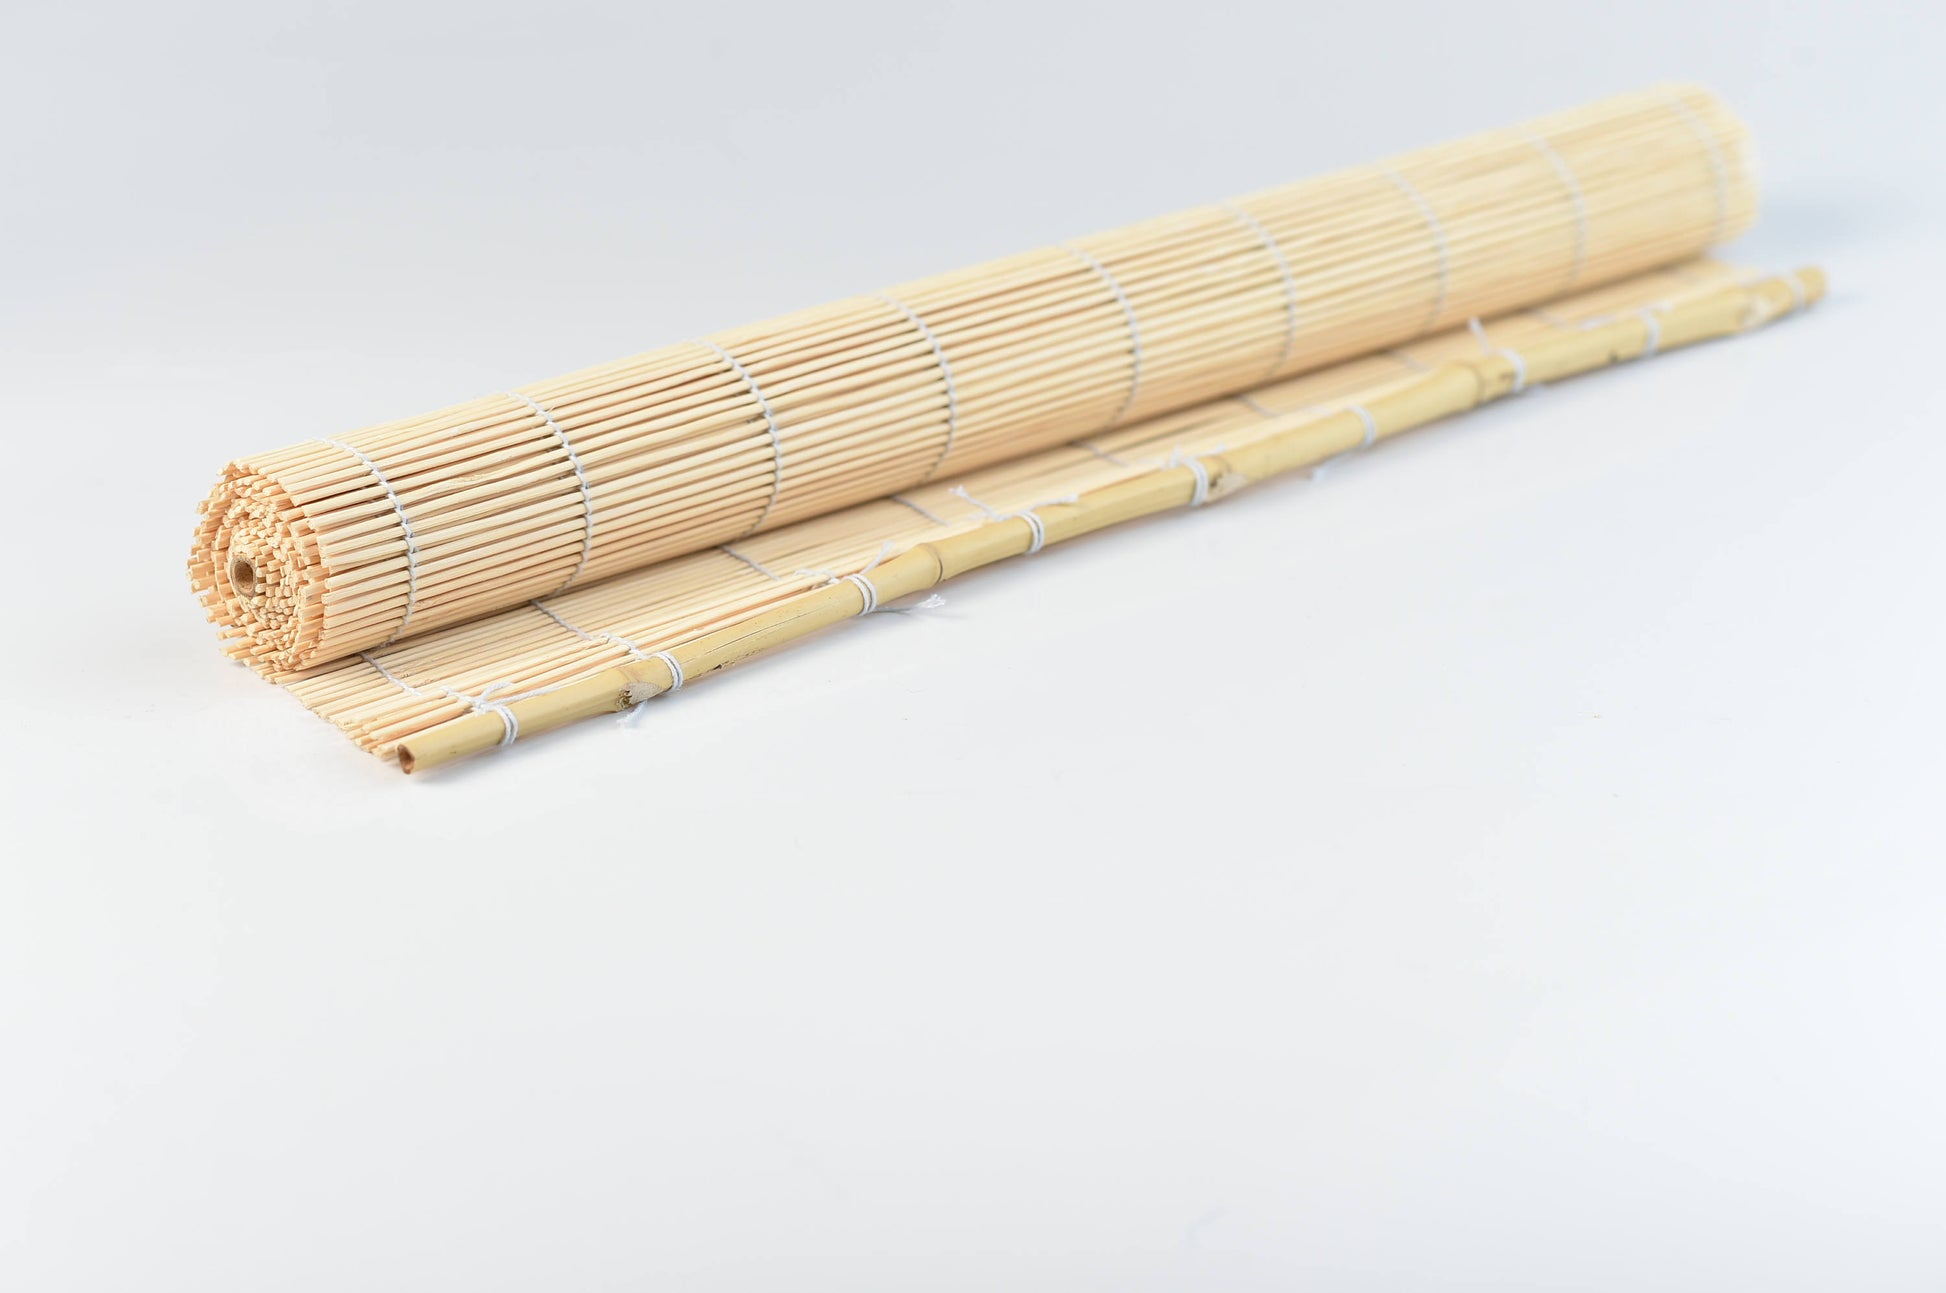 Rolled bamboo mat